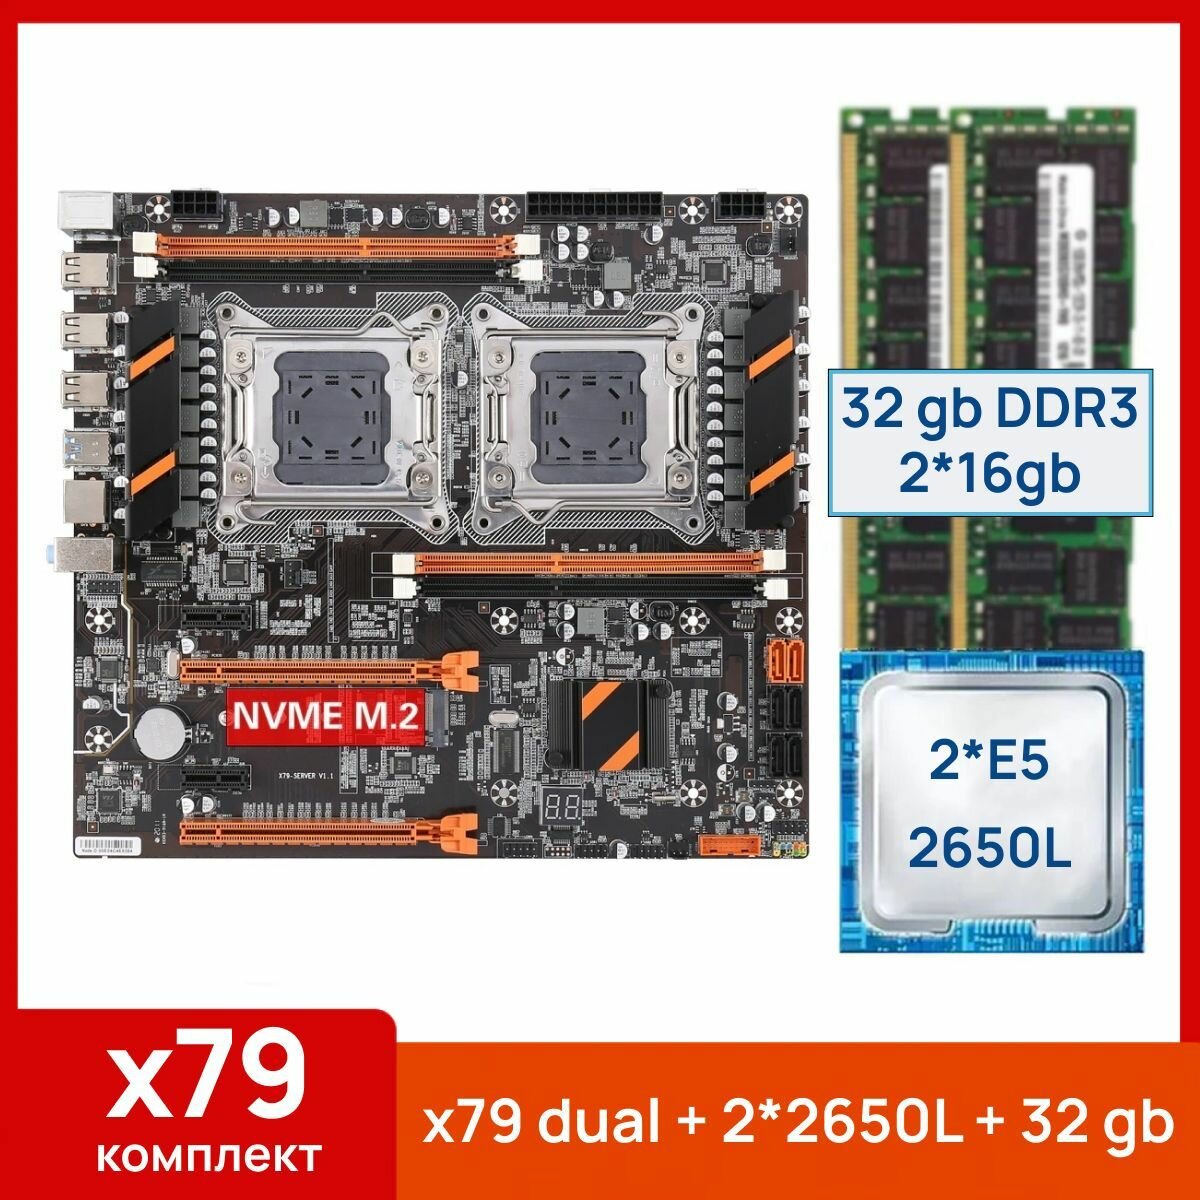 Комплект: Atermiter x79 dual + Xeon E5 2650L*2 + 32 gb(2x16gb) DDR3 ecc reg